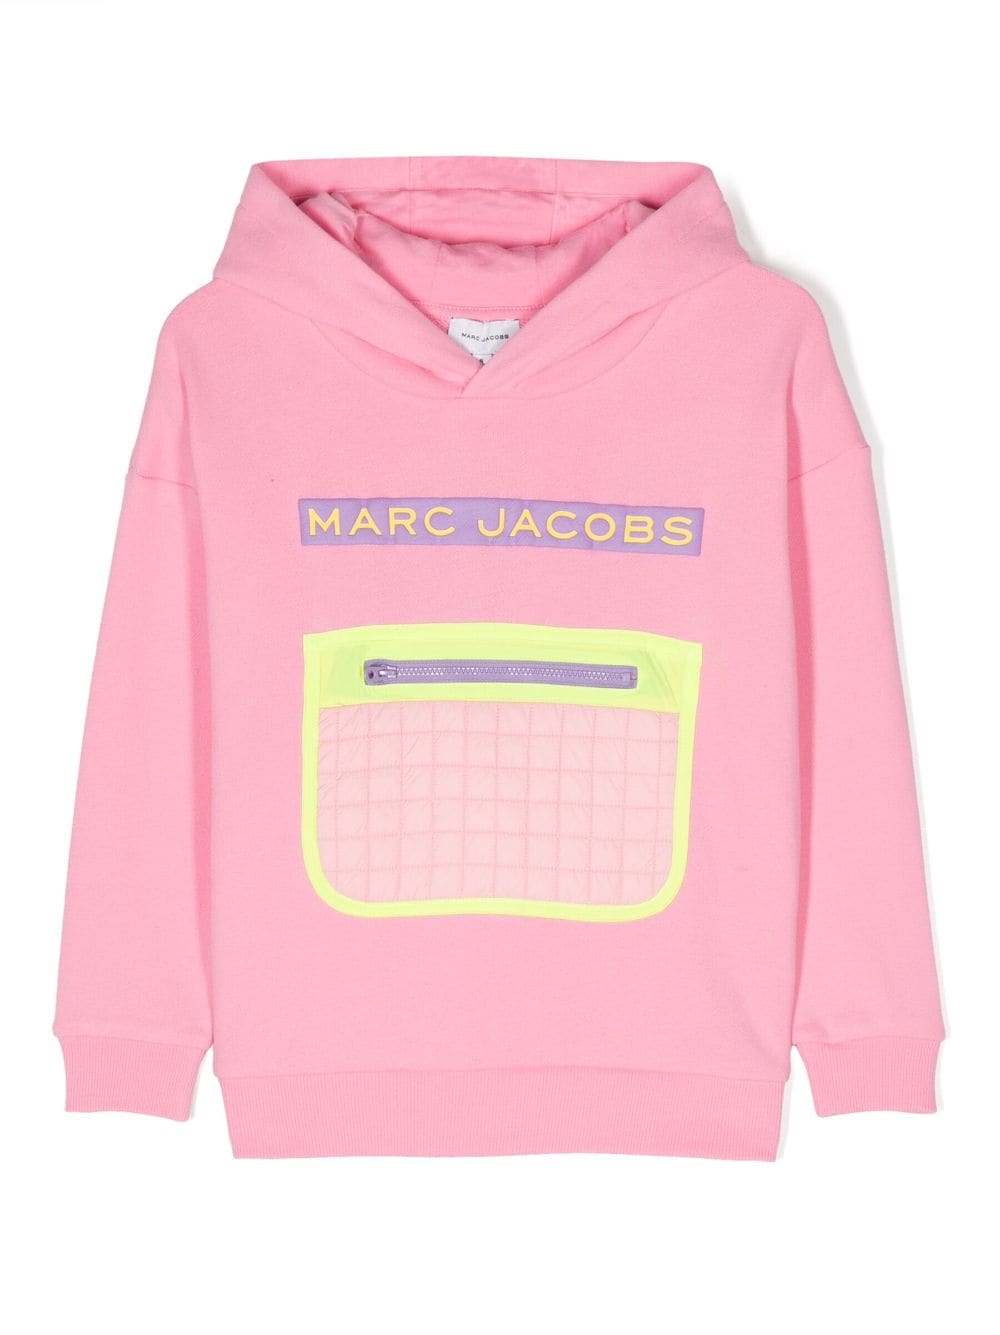 Image 1 of Marc Jacobs Kids hoodie con logo bordado